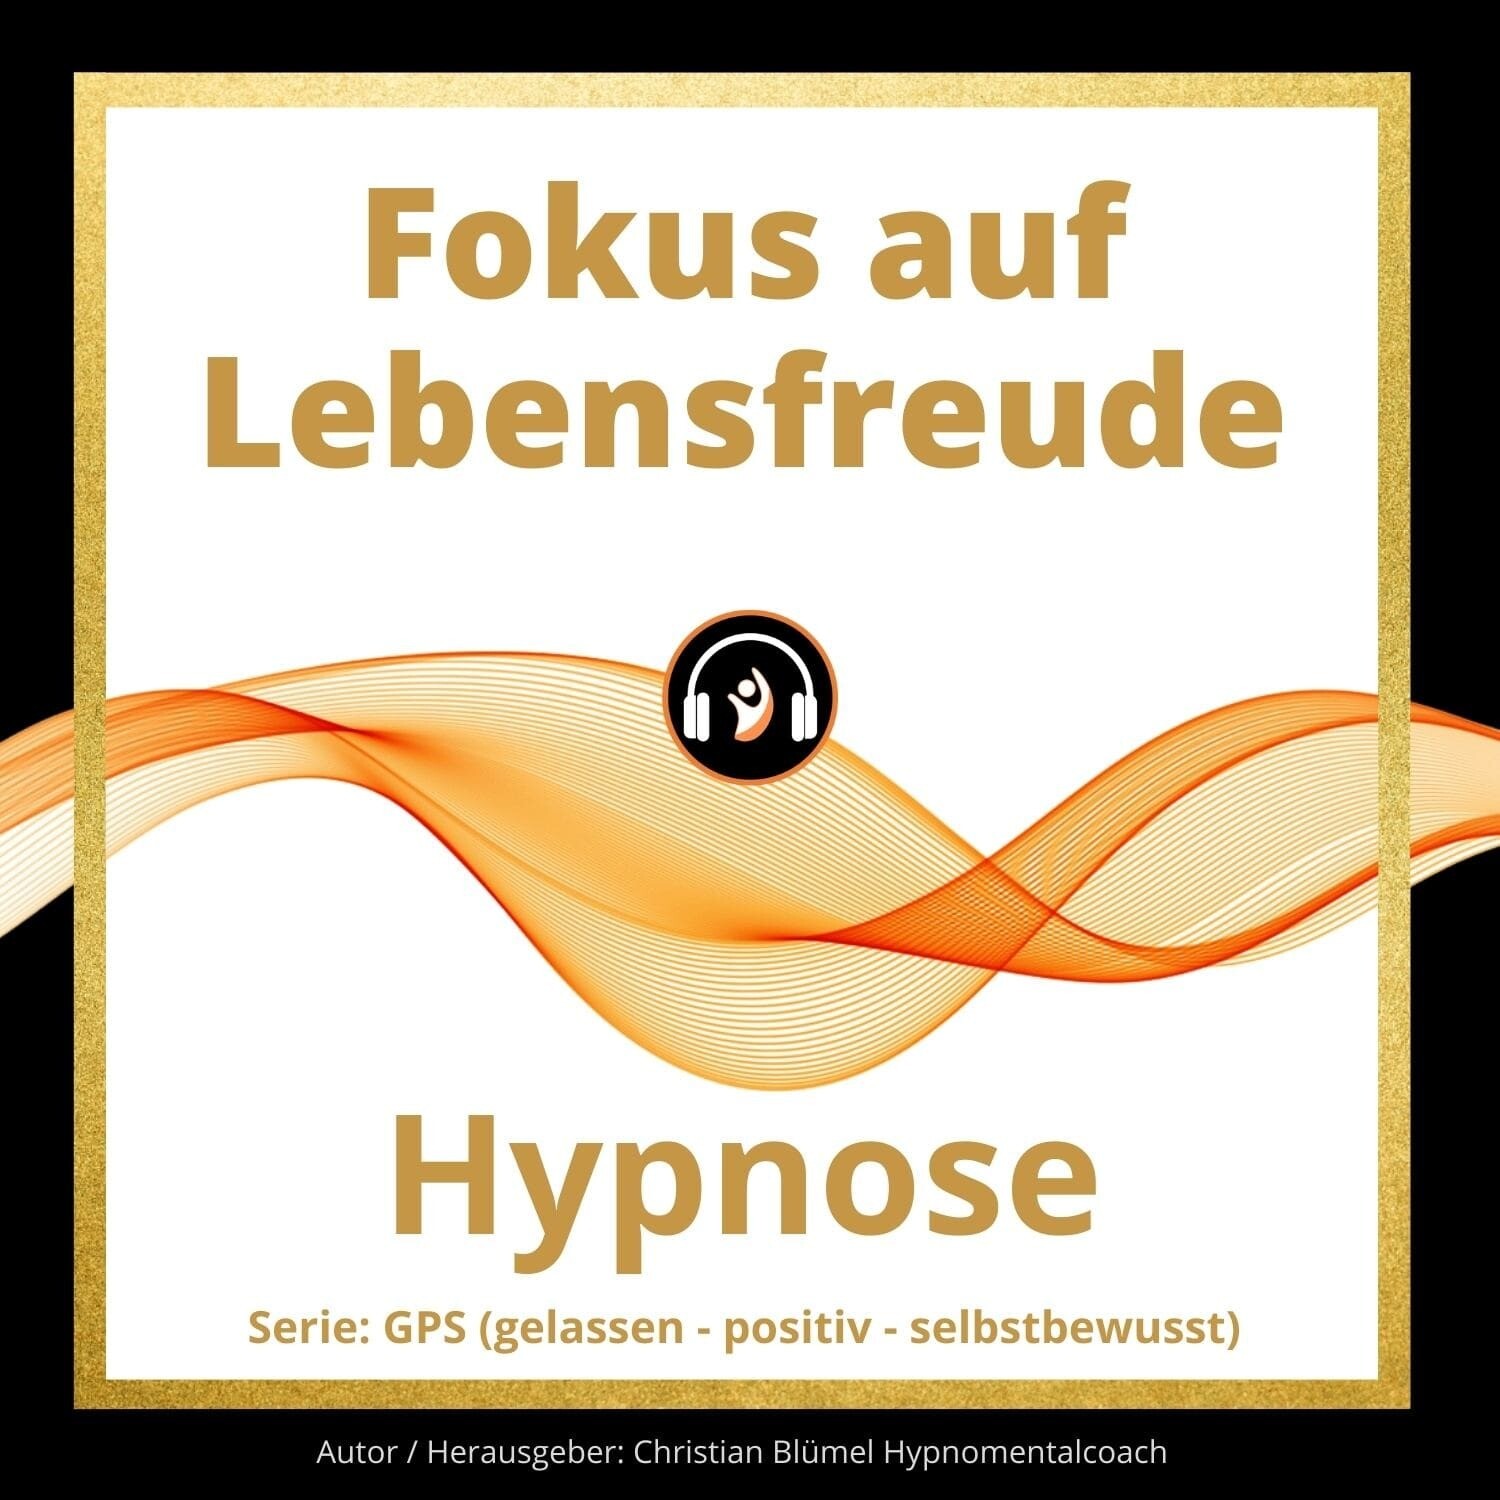 Audio Hypnose: Fokus auf Lebensfreude - GPS Hypnose